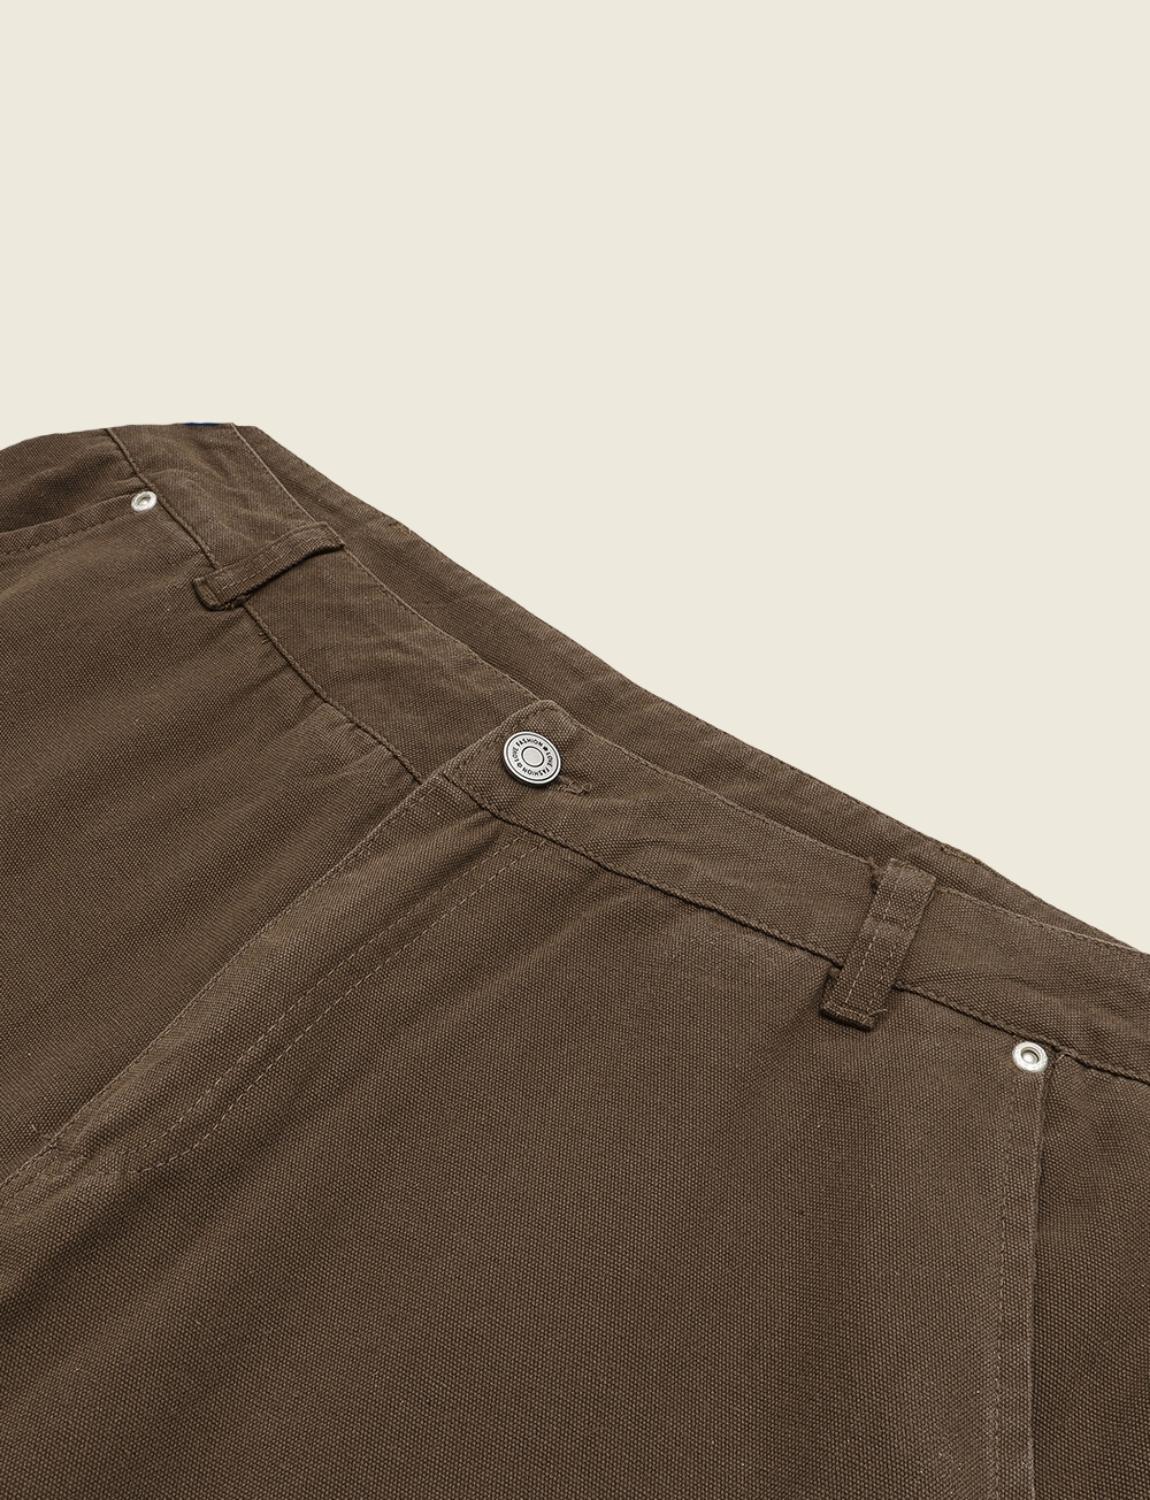 FSW® Casual Mens Streetwear Shorts Loose Multi-Pocket